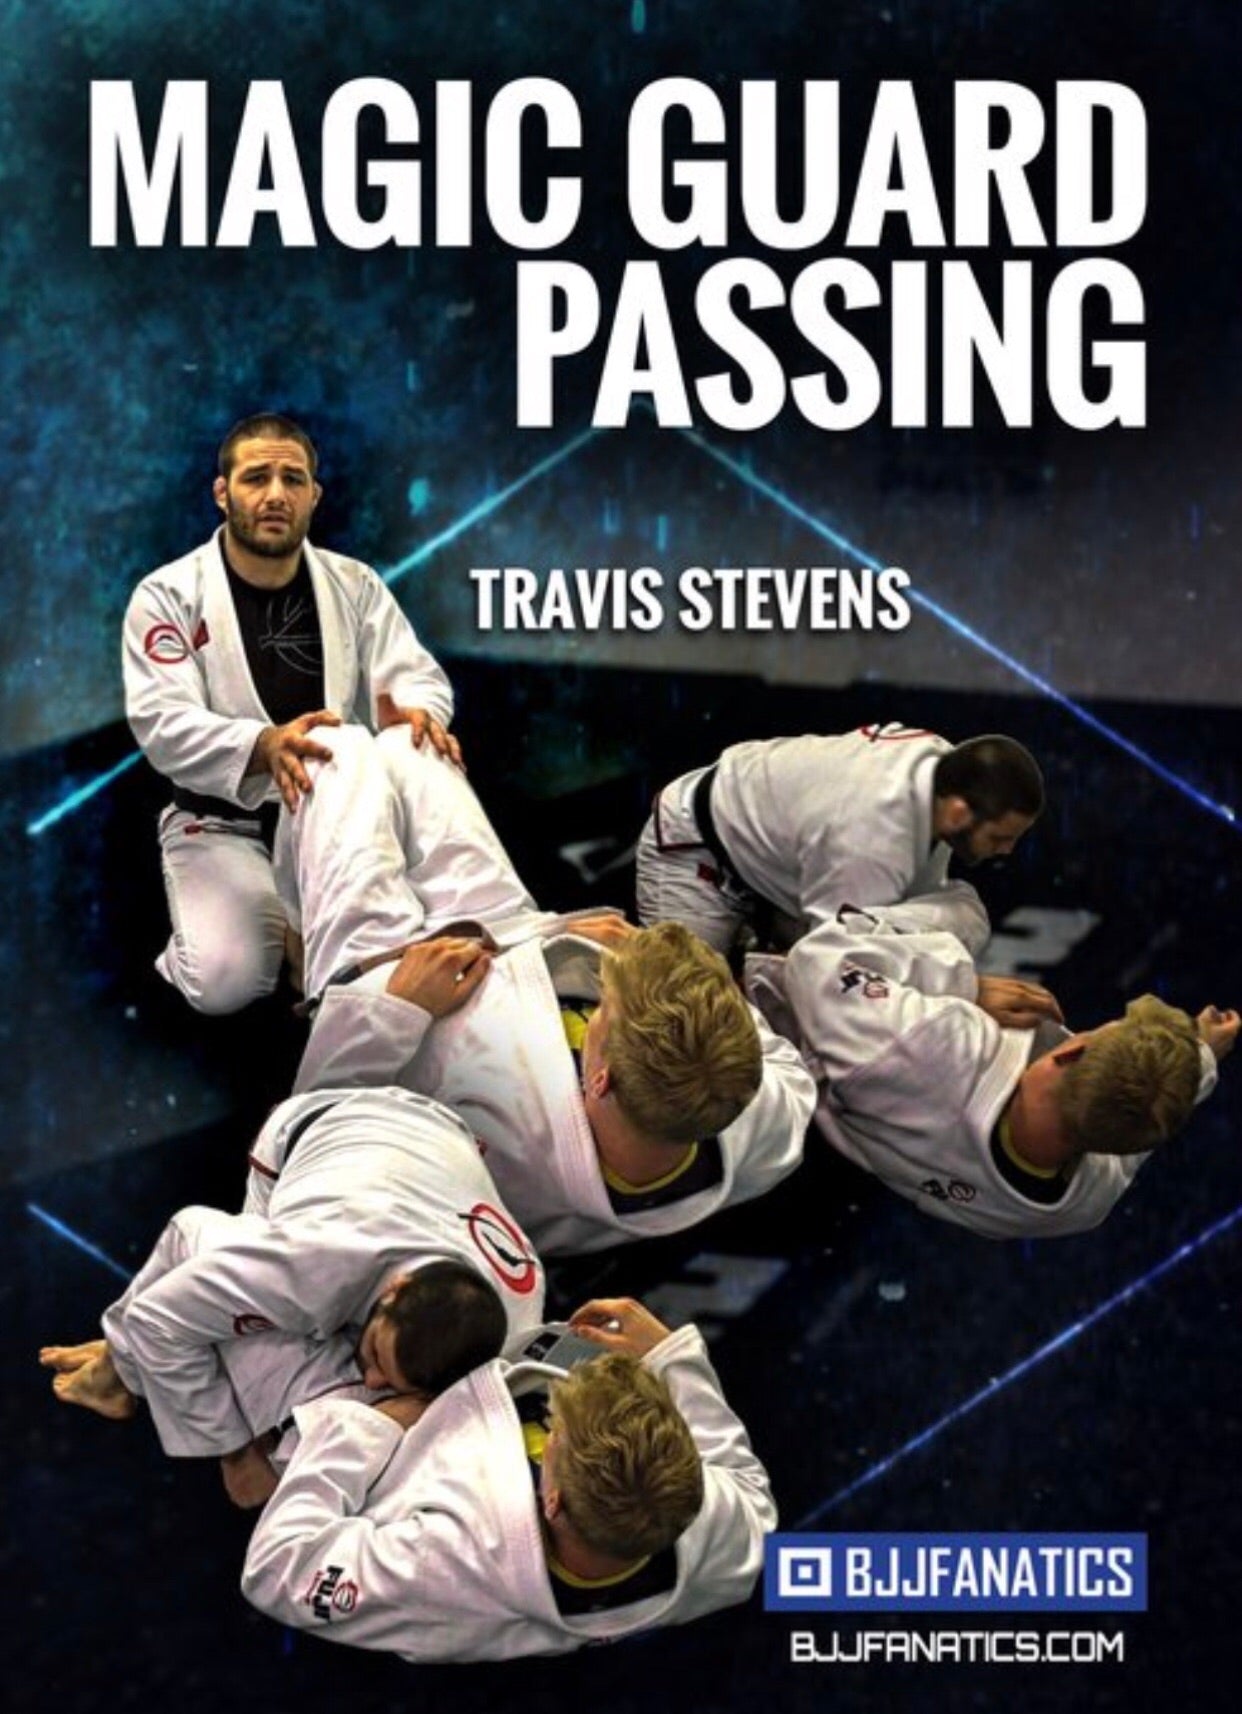 Magic Guard Passing 2 DVD Set by Travis Stevens  - Budovideos Inc